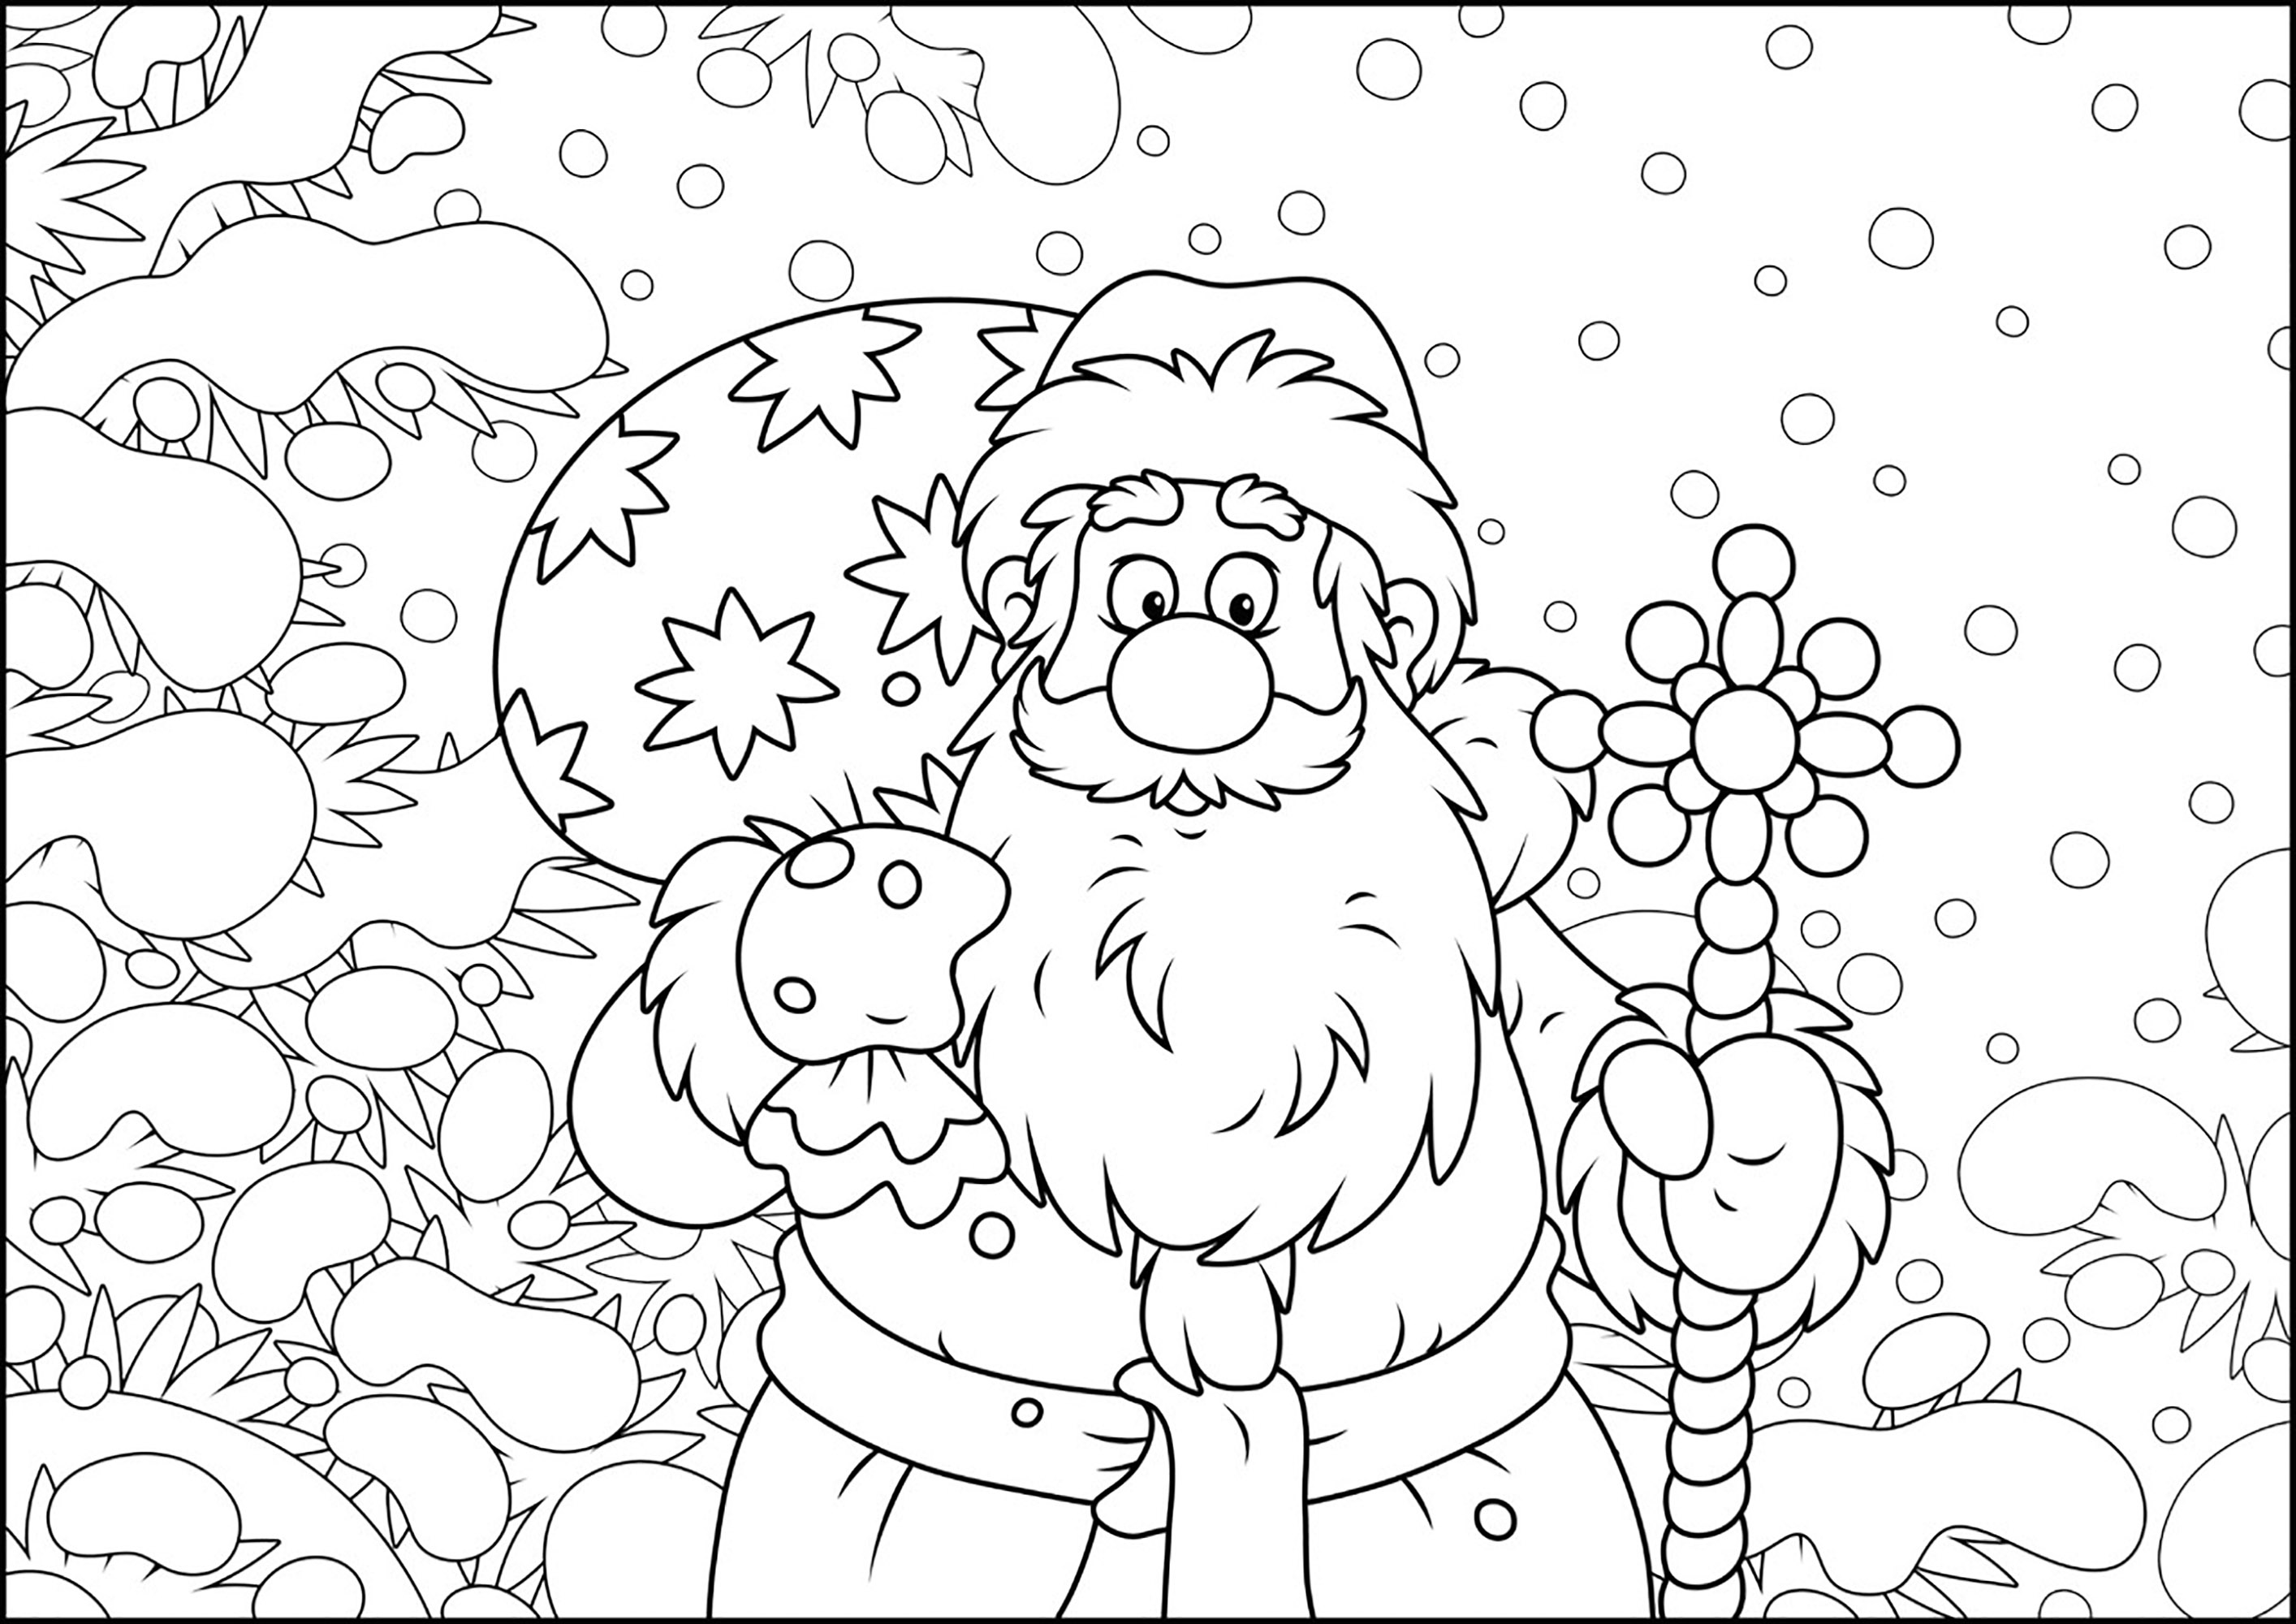 Santa in cartoon mode. Color this Santa Claus bringing presents to good children in a snowy landscape, Source : 123rf   Artist : Alex. Bannykh